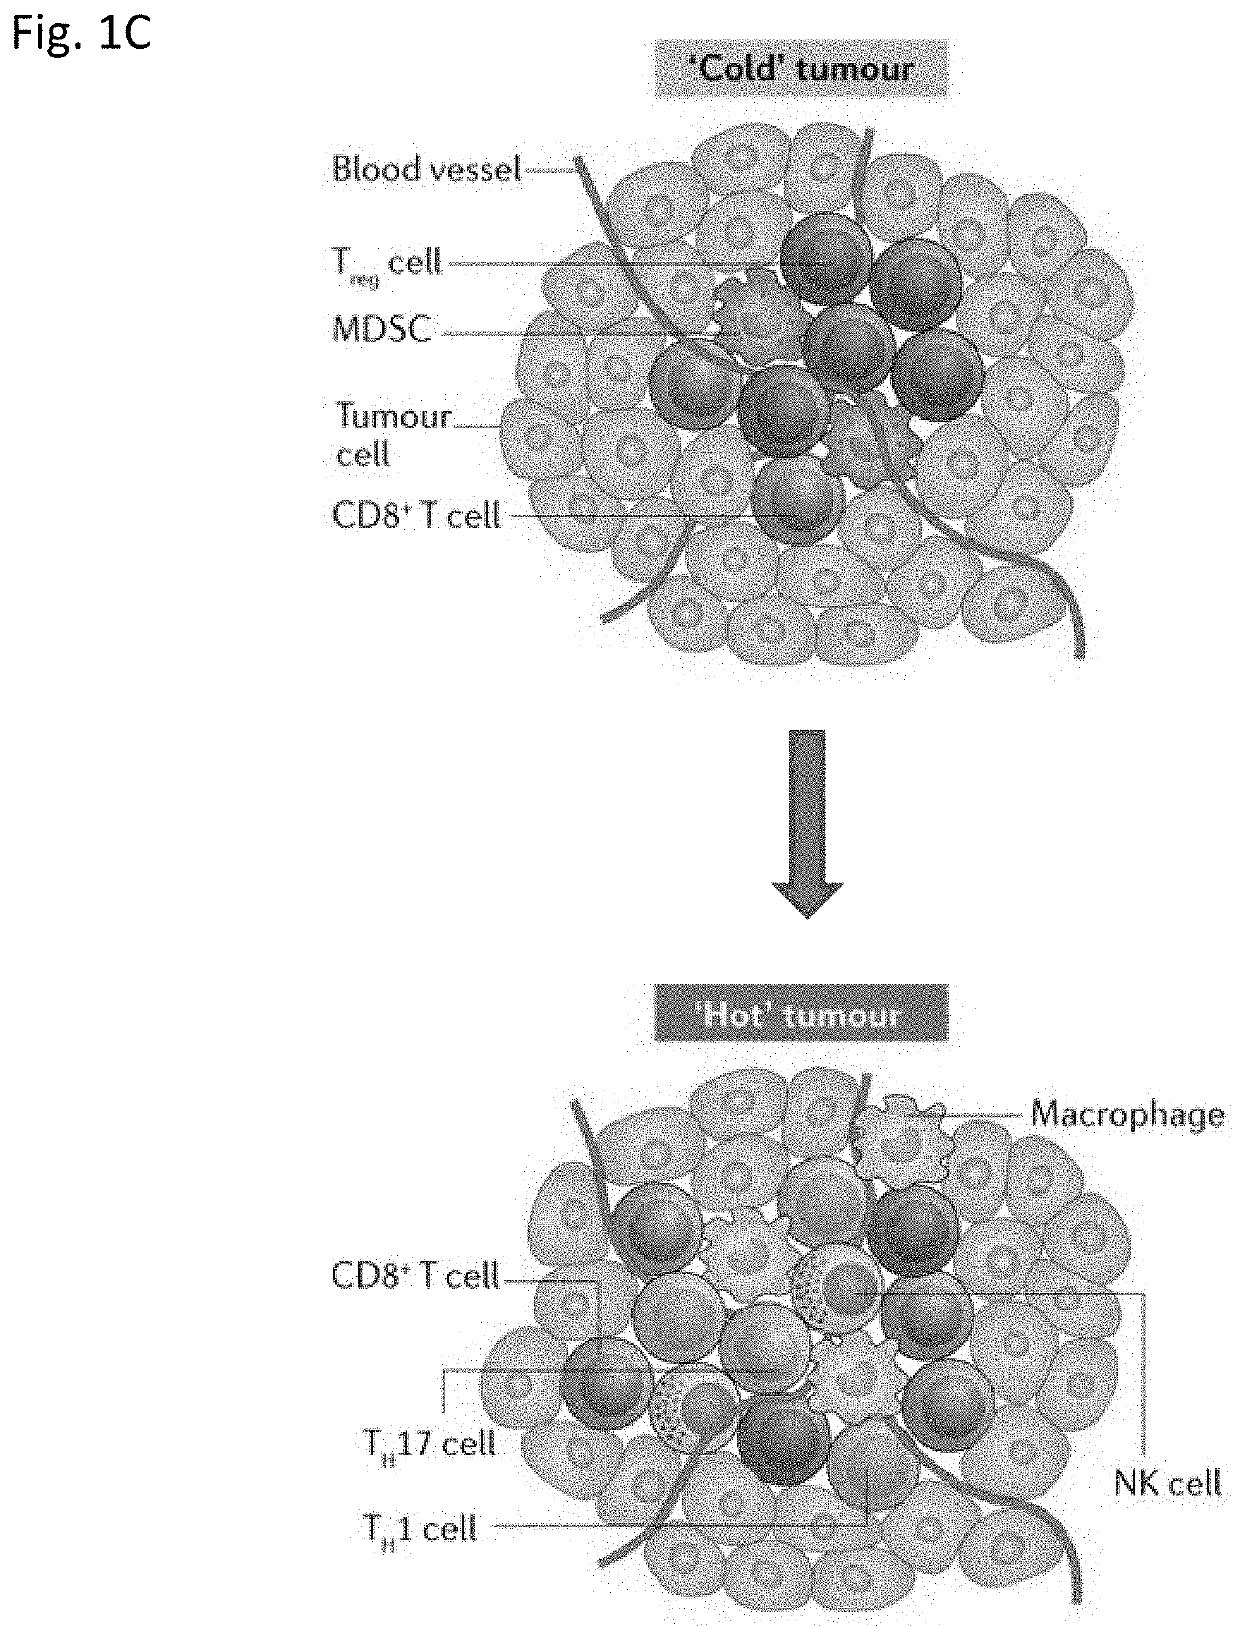 Modulating gabarap to modulate immunogenic cell death